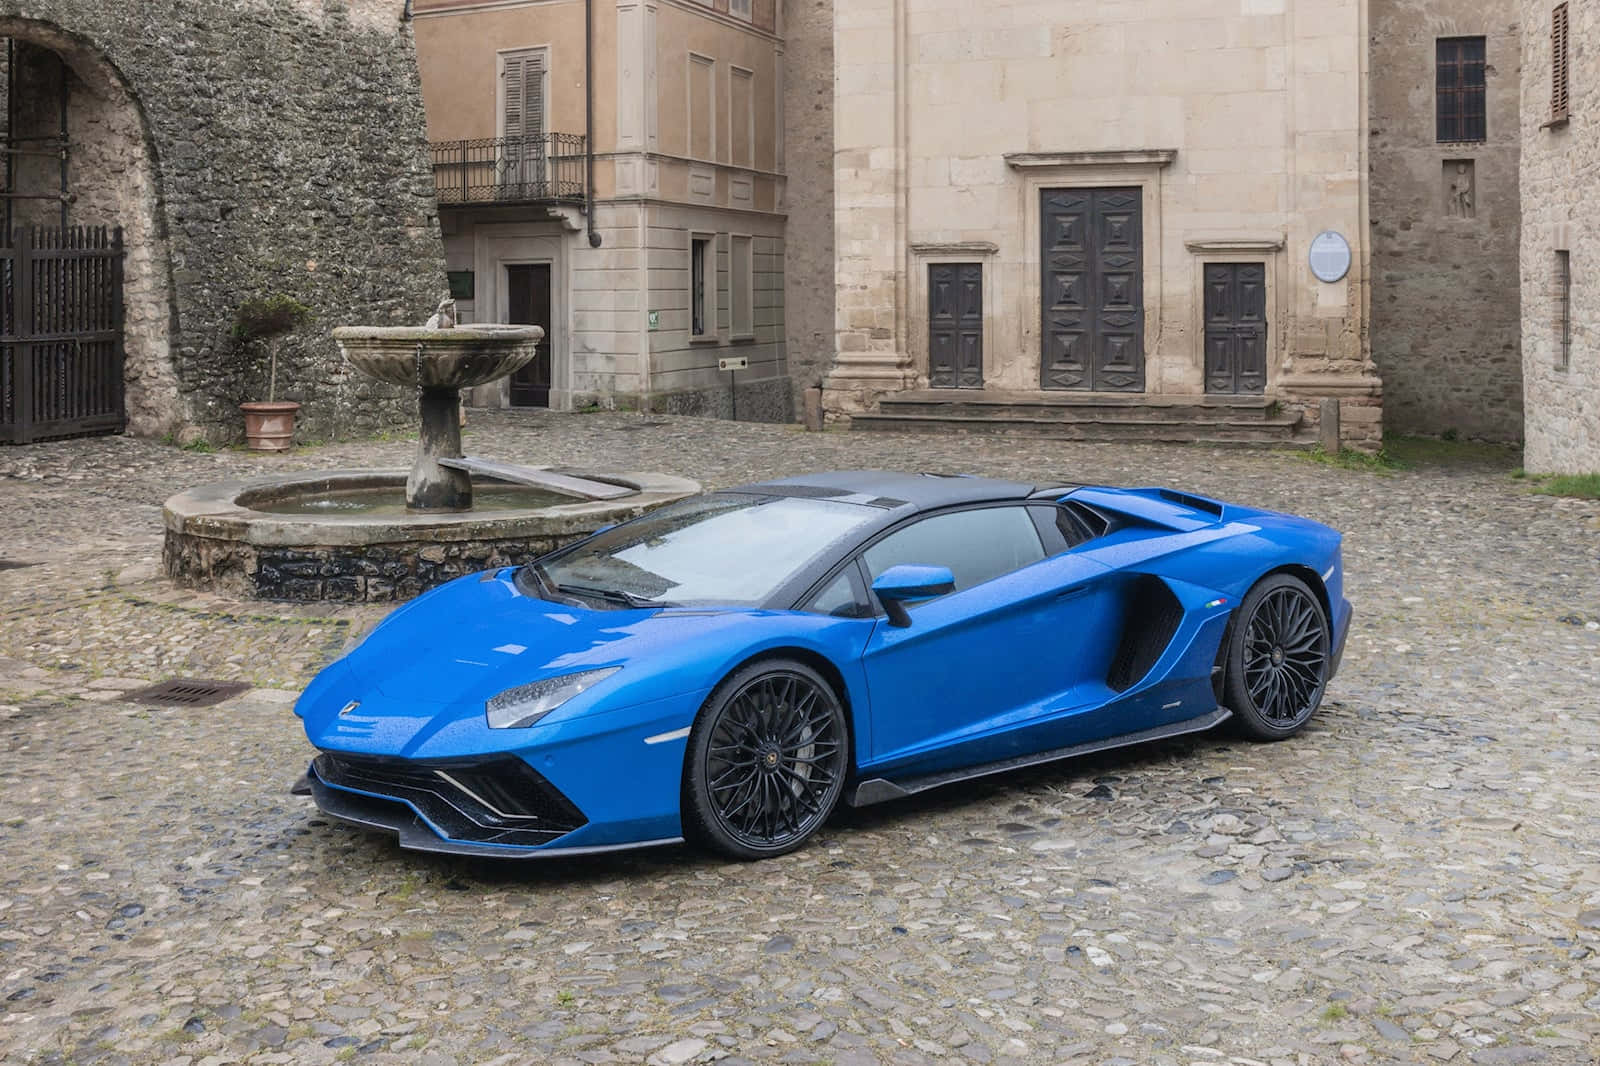 Den blå Lamborghini Huracan er parkeret foran en stenbygning.